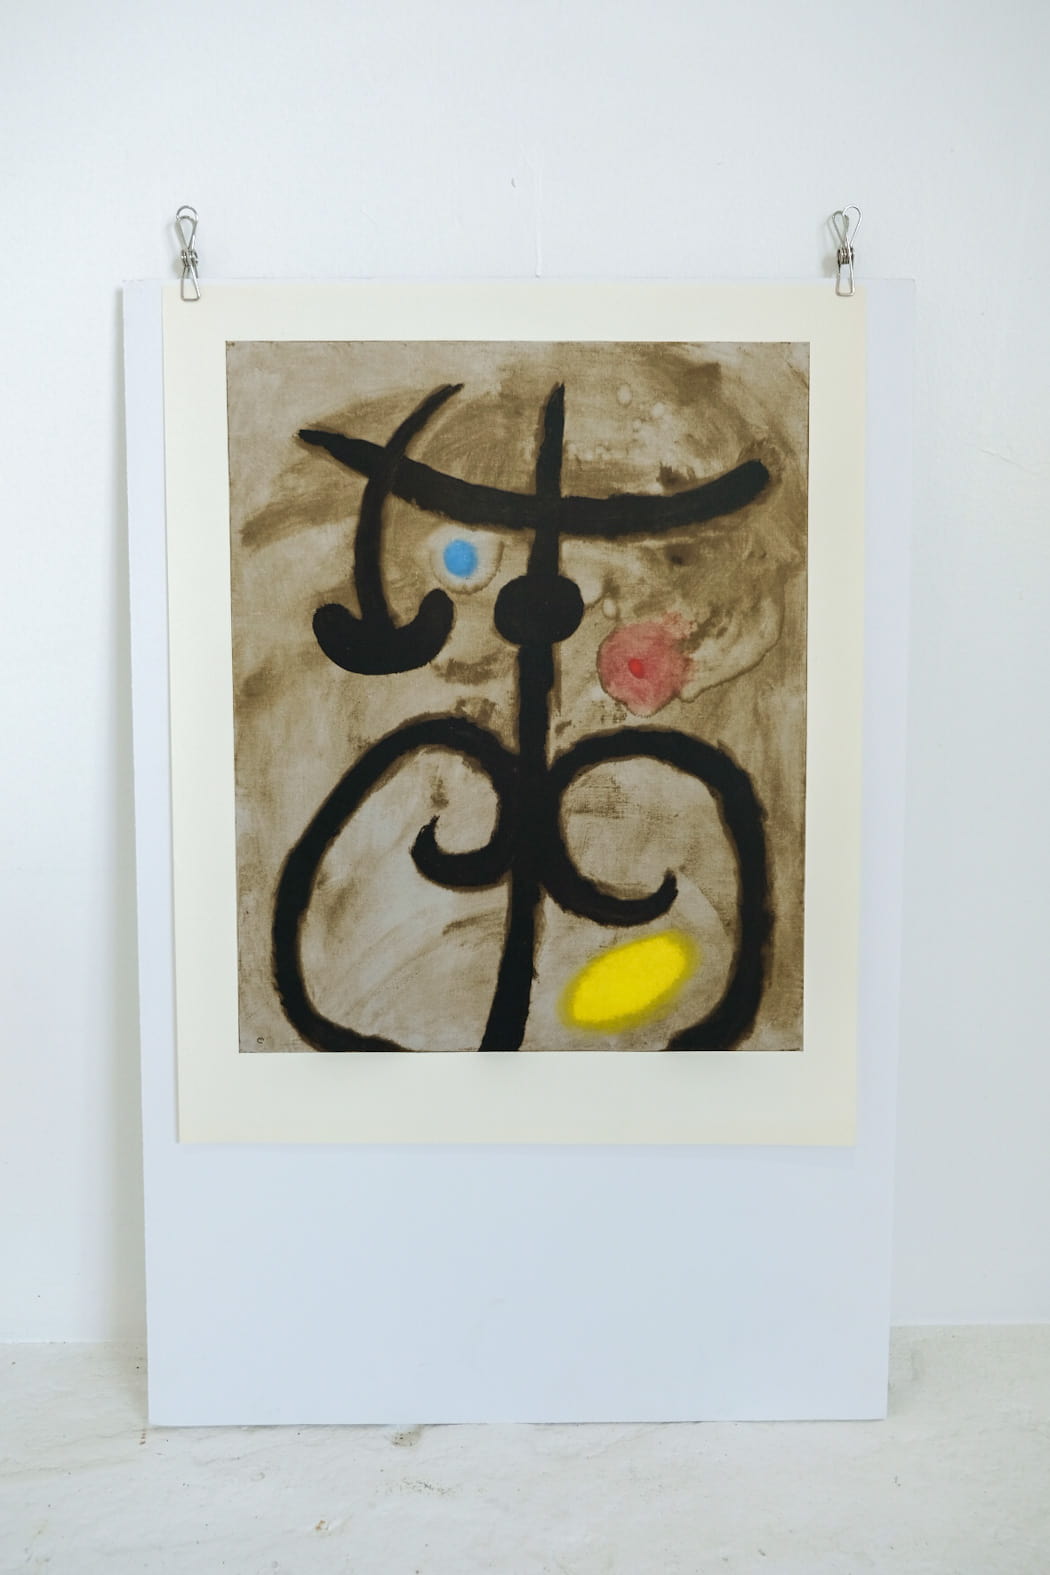 Joan Miro FEMME ASSISE III/V Plate #11